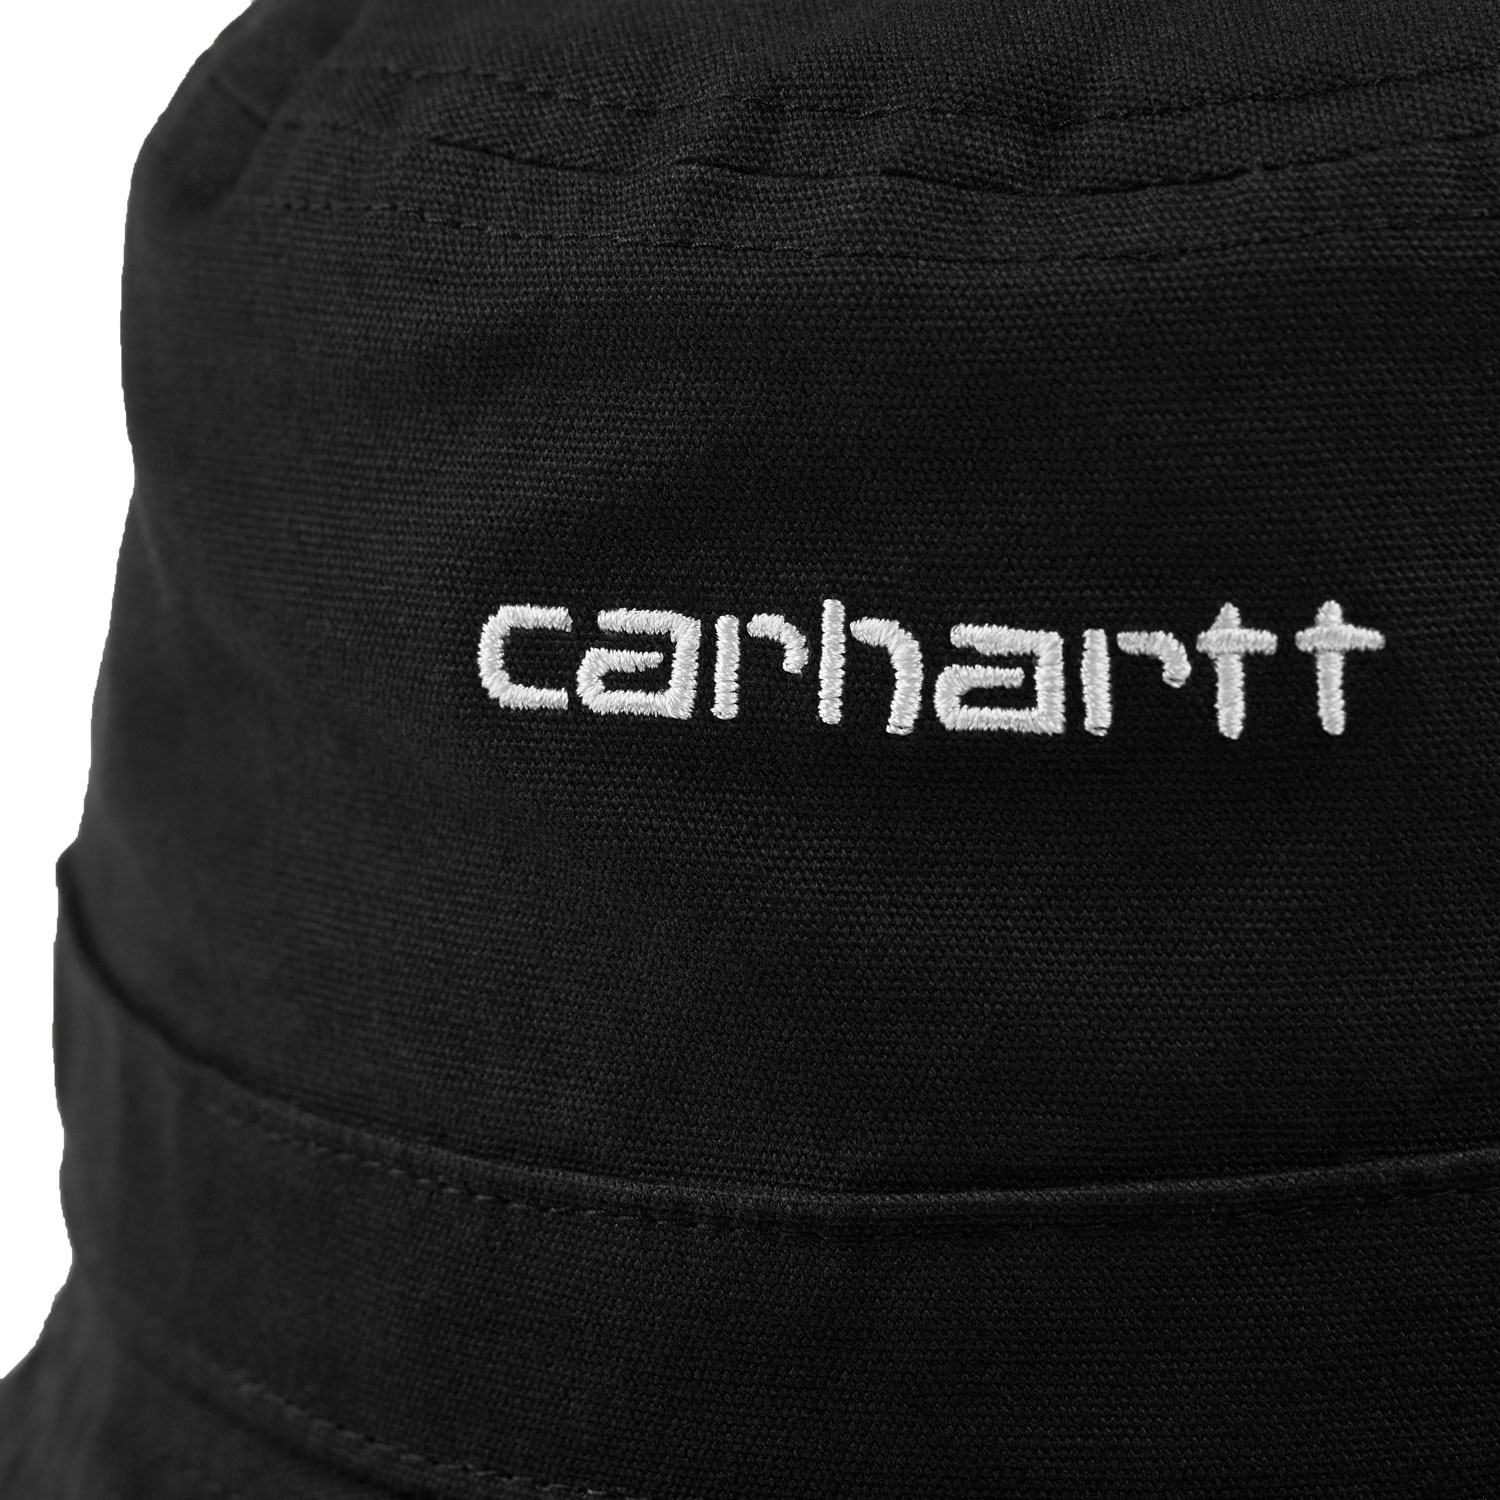 Carhartt Script Bucket Hat - Black/White